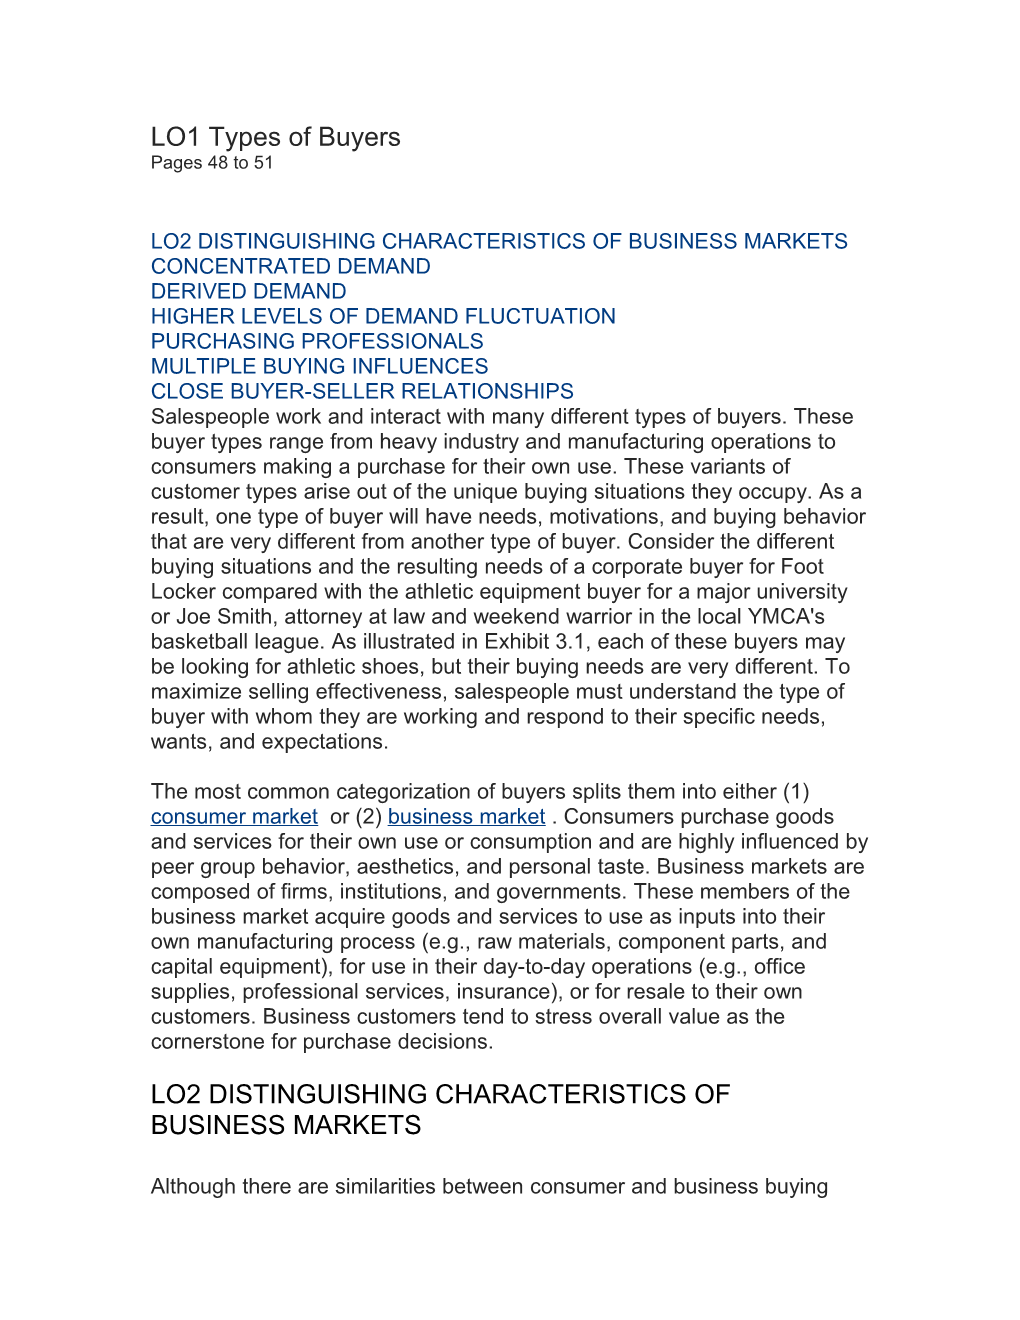 Lo2 Distinguishing Characteristics of Business Markets